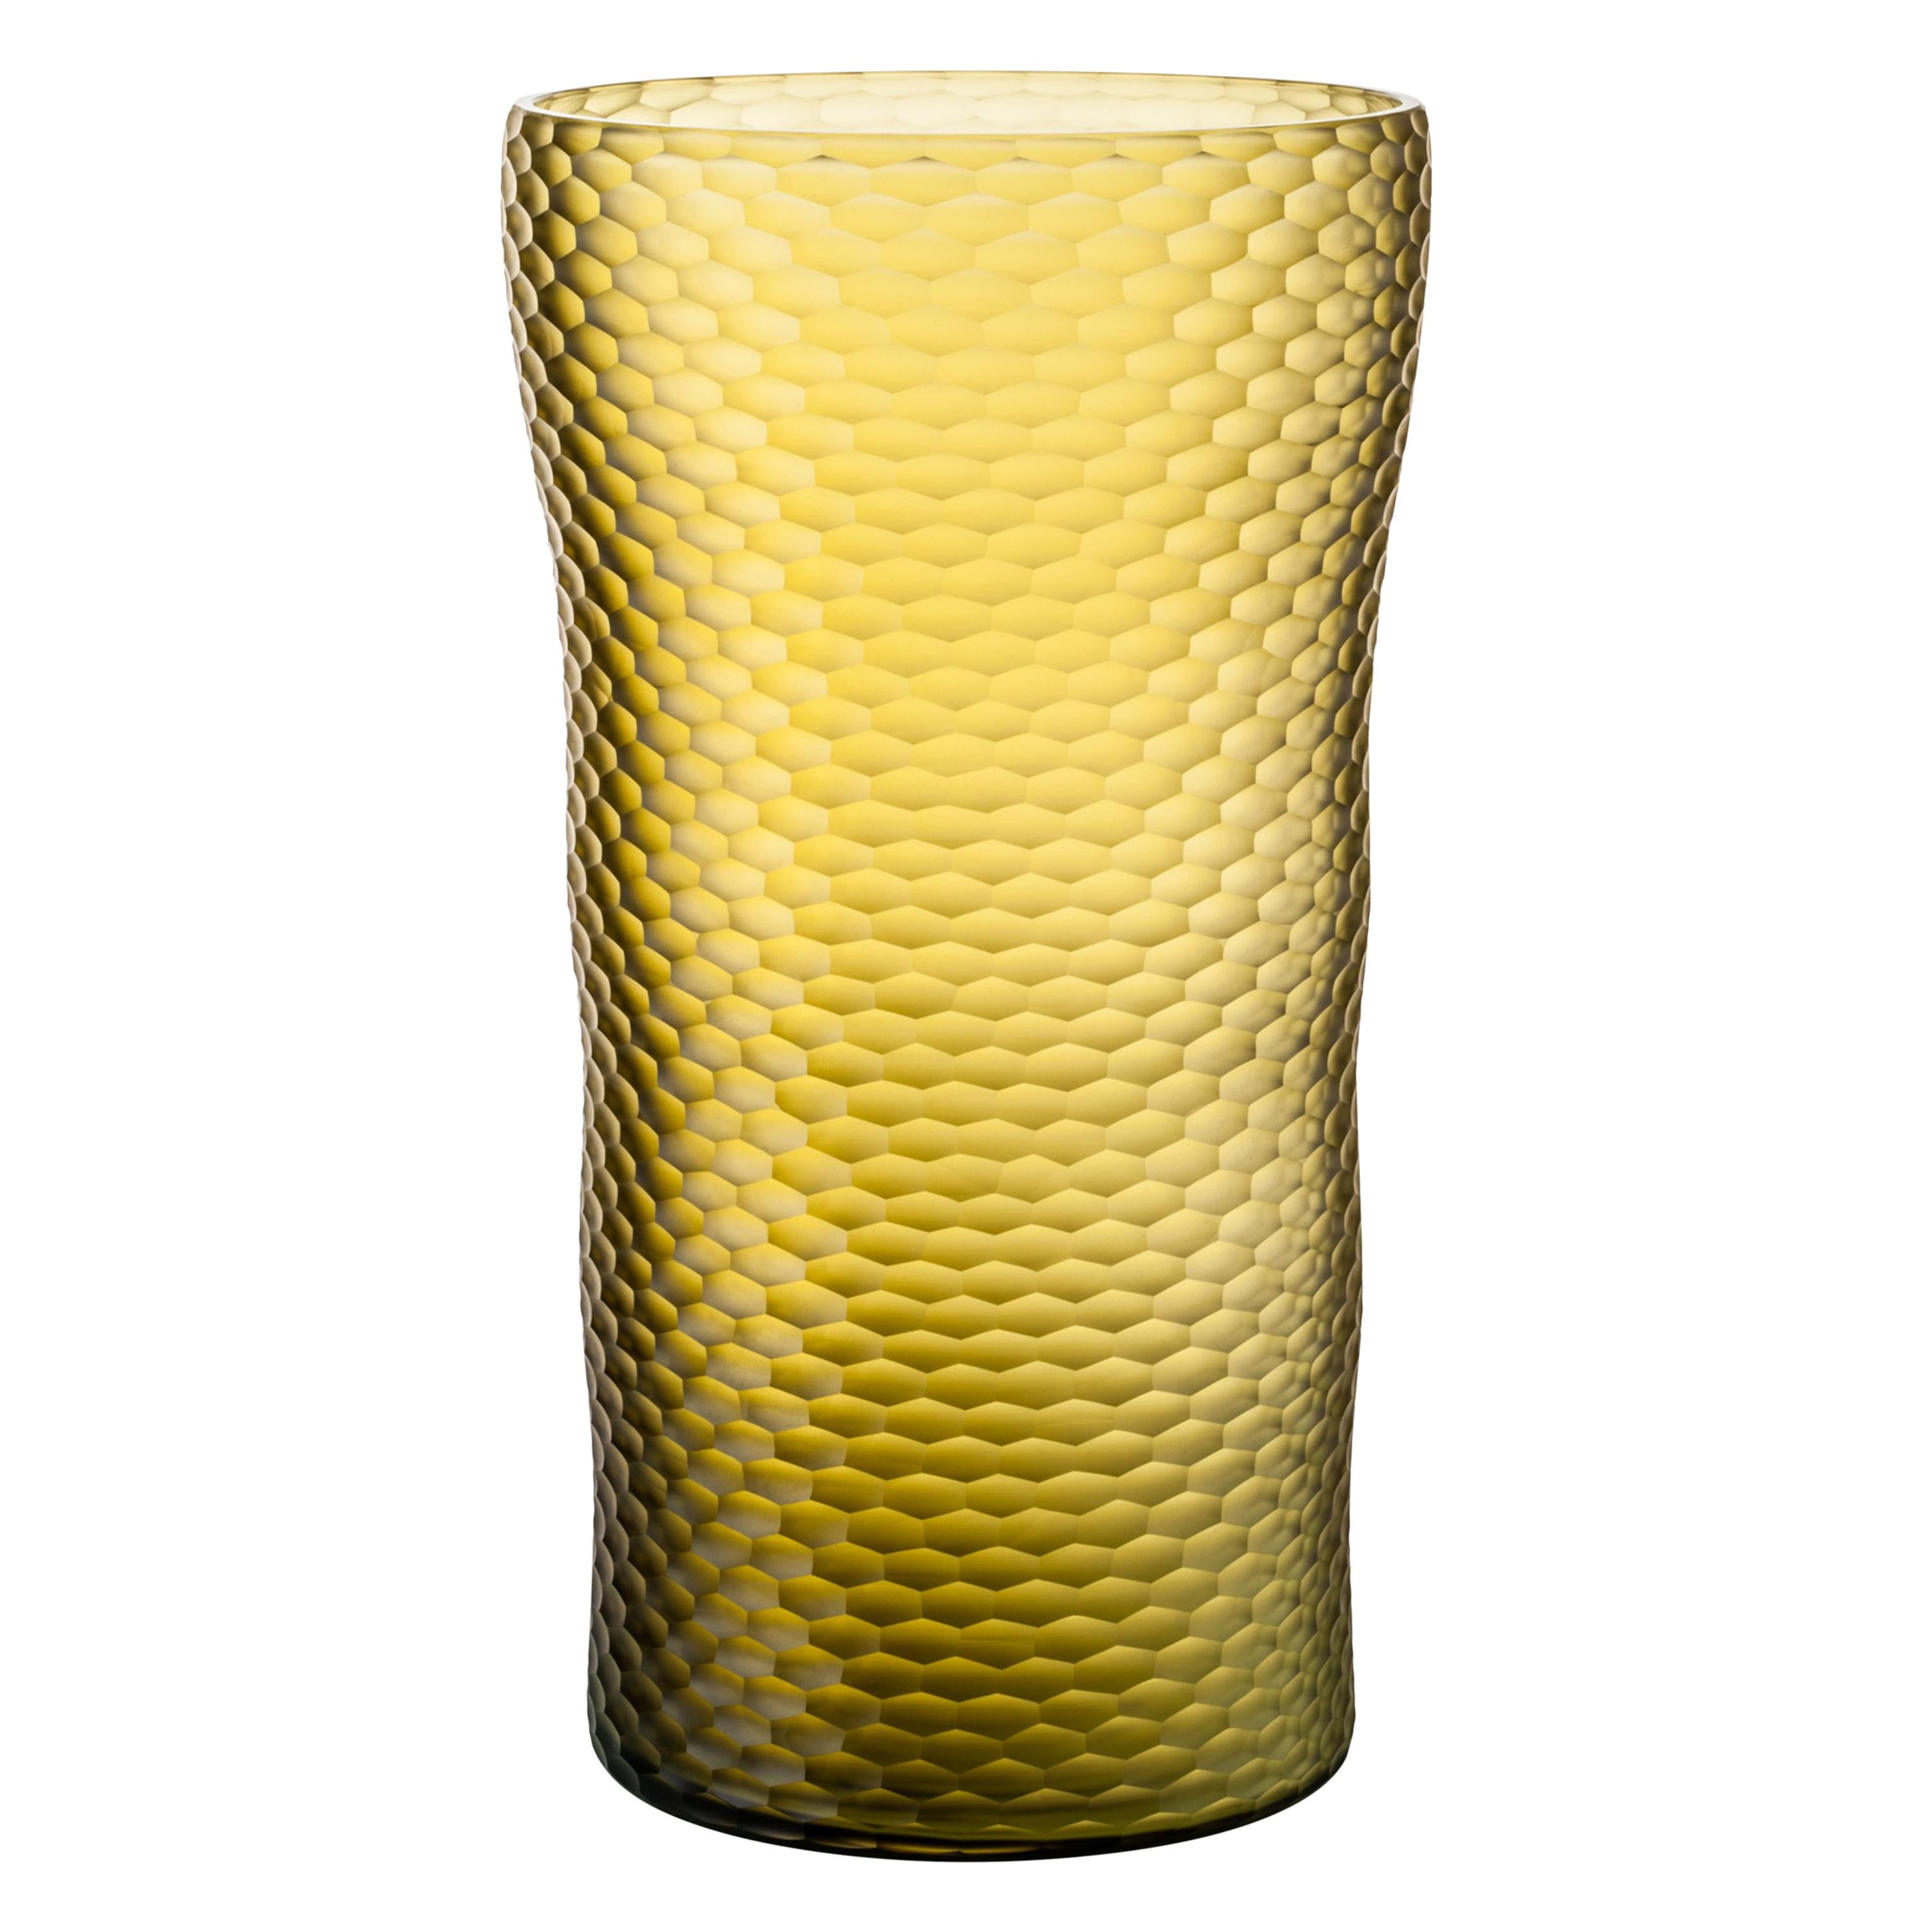 Venini Battuto A Nido D’ape Glass Vase in Straw Yellow by Carlo Scarpa